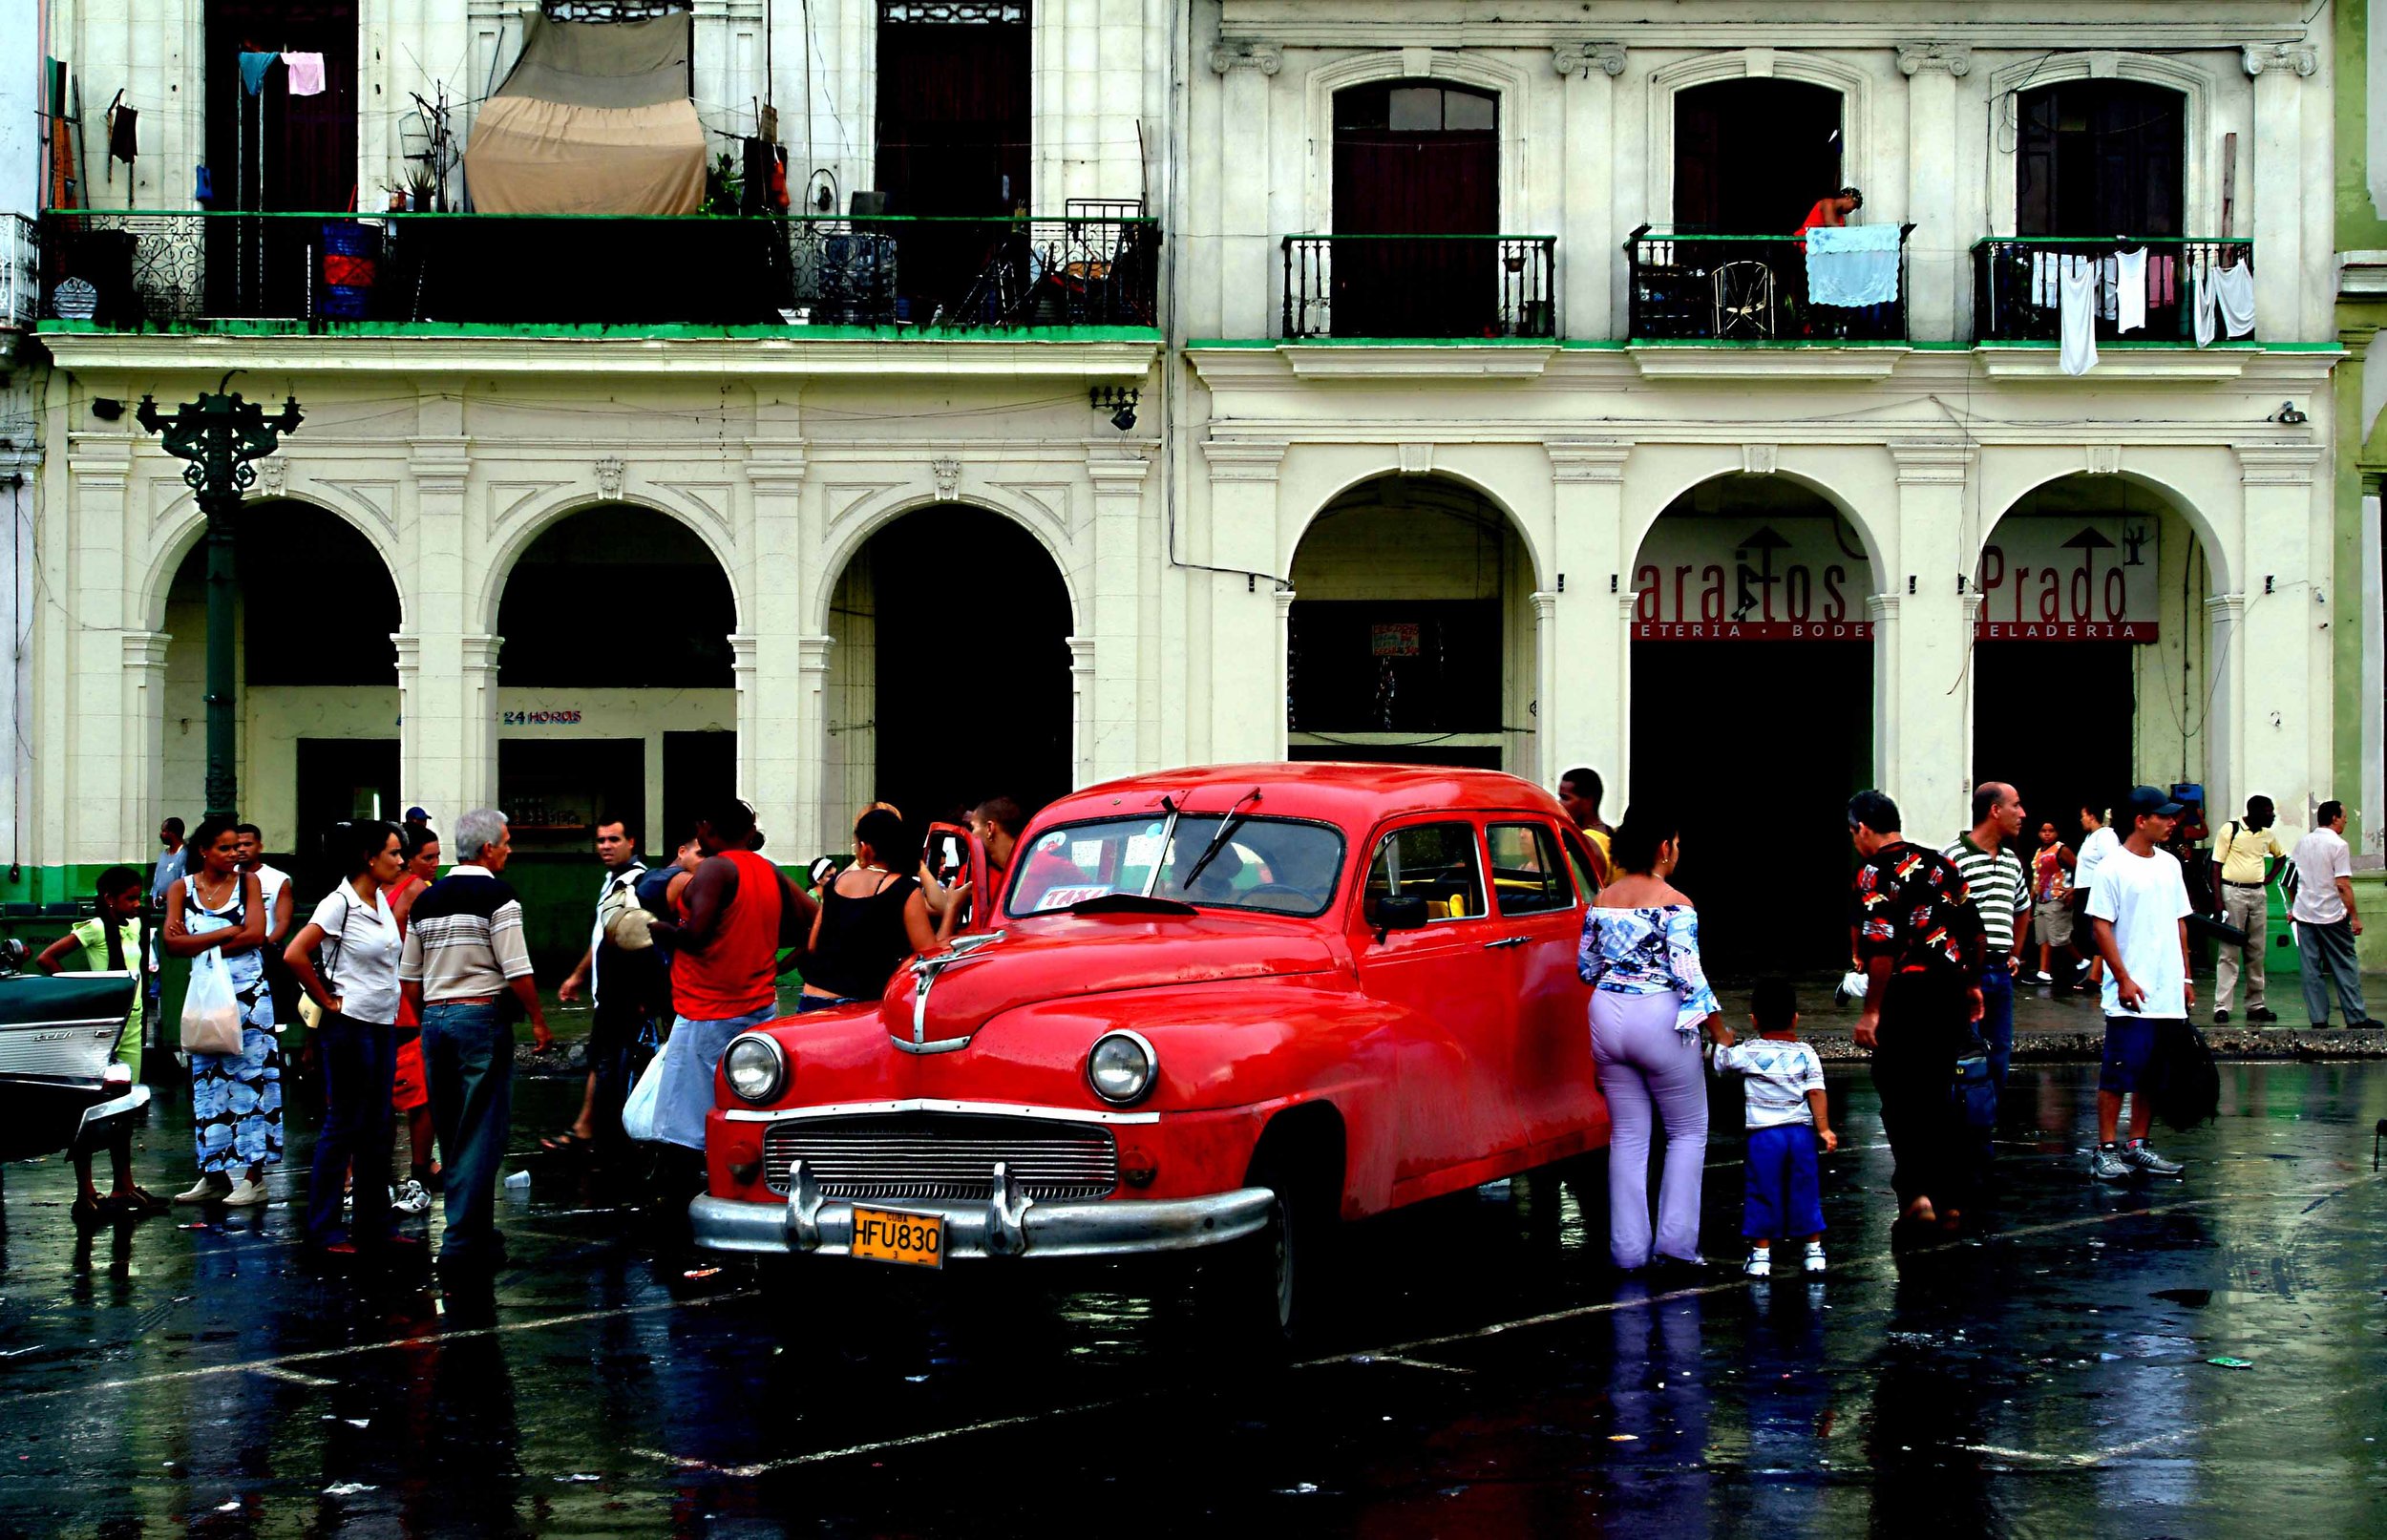 Cuba HavanaRed Taxi.jpg